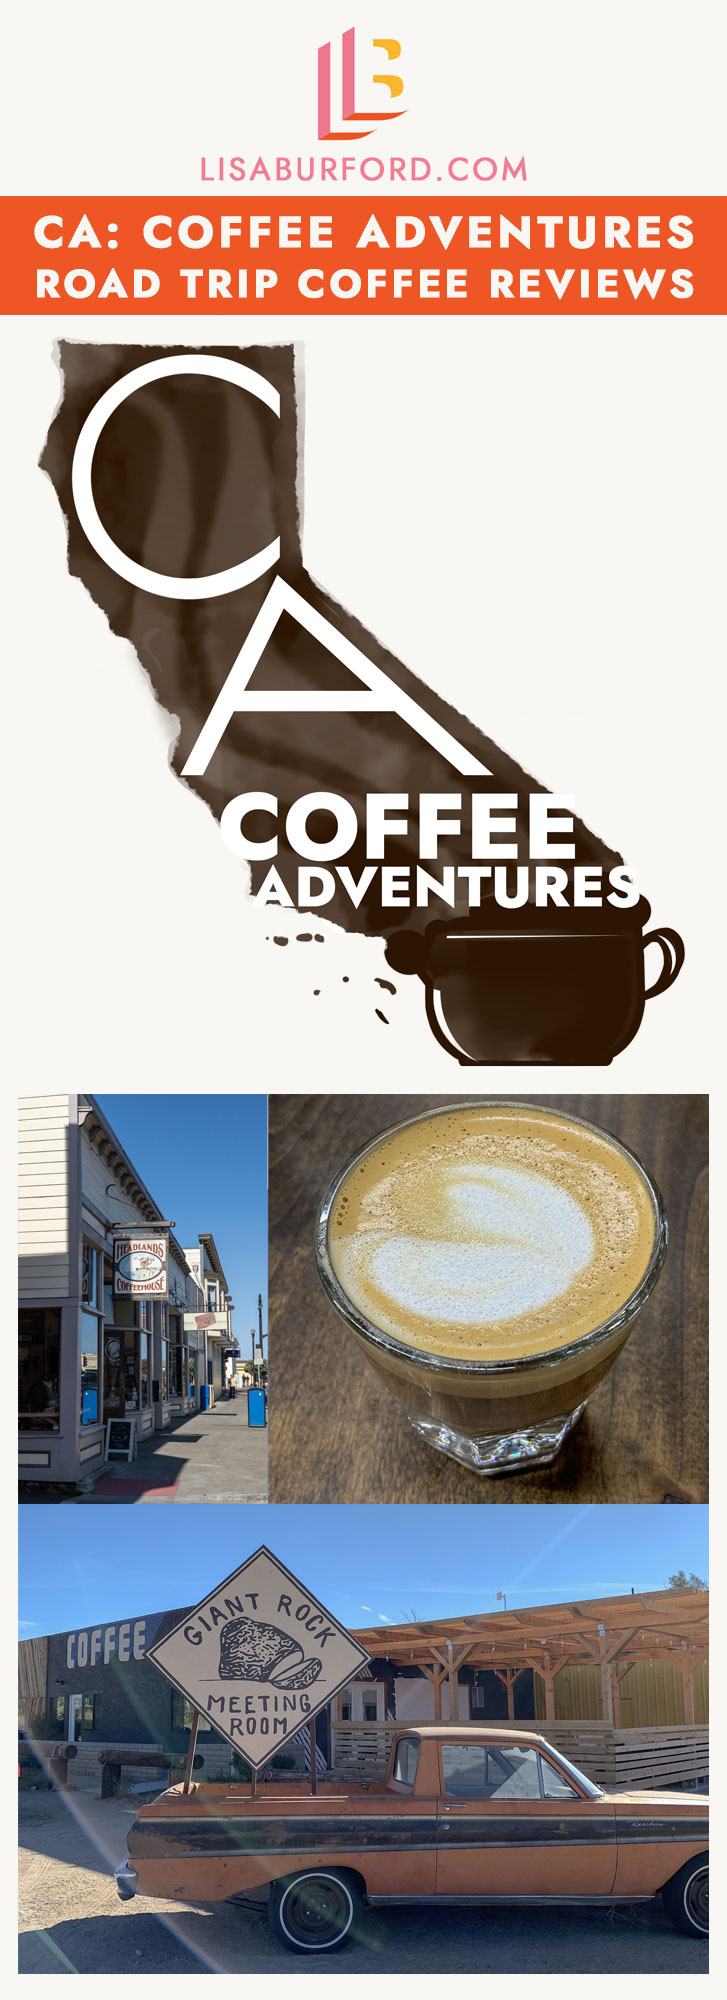 CA: Coffee Adventures - Road Trip Coffee Reviews